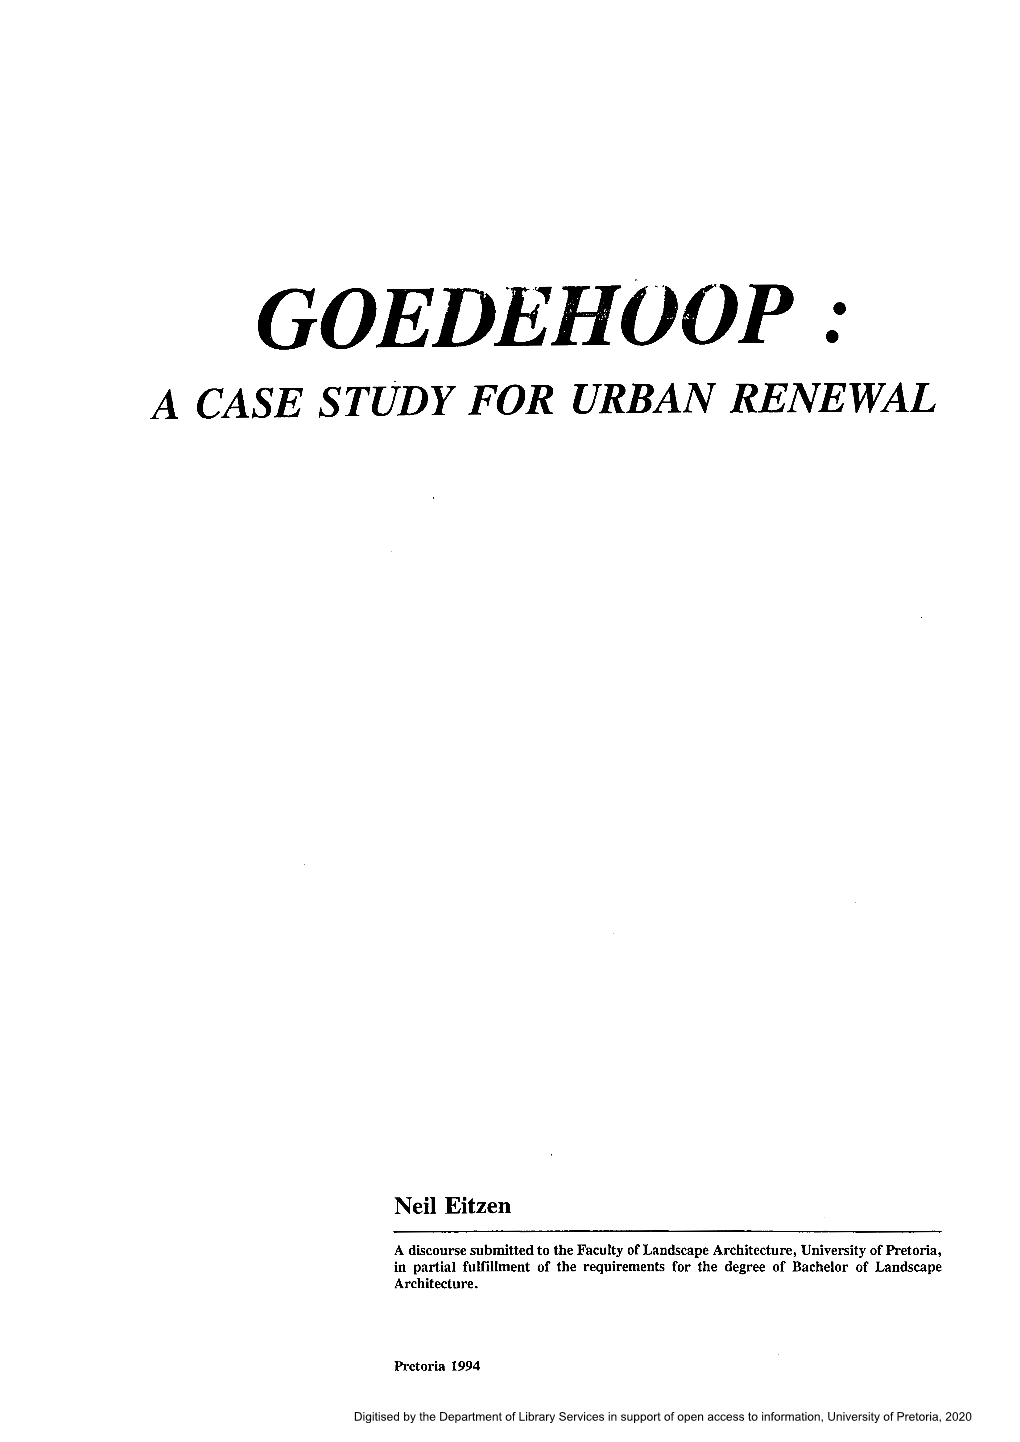 Goedehoop • a Case Study for Urban Renewal